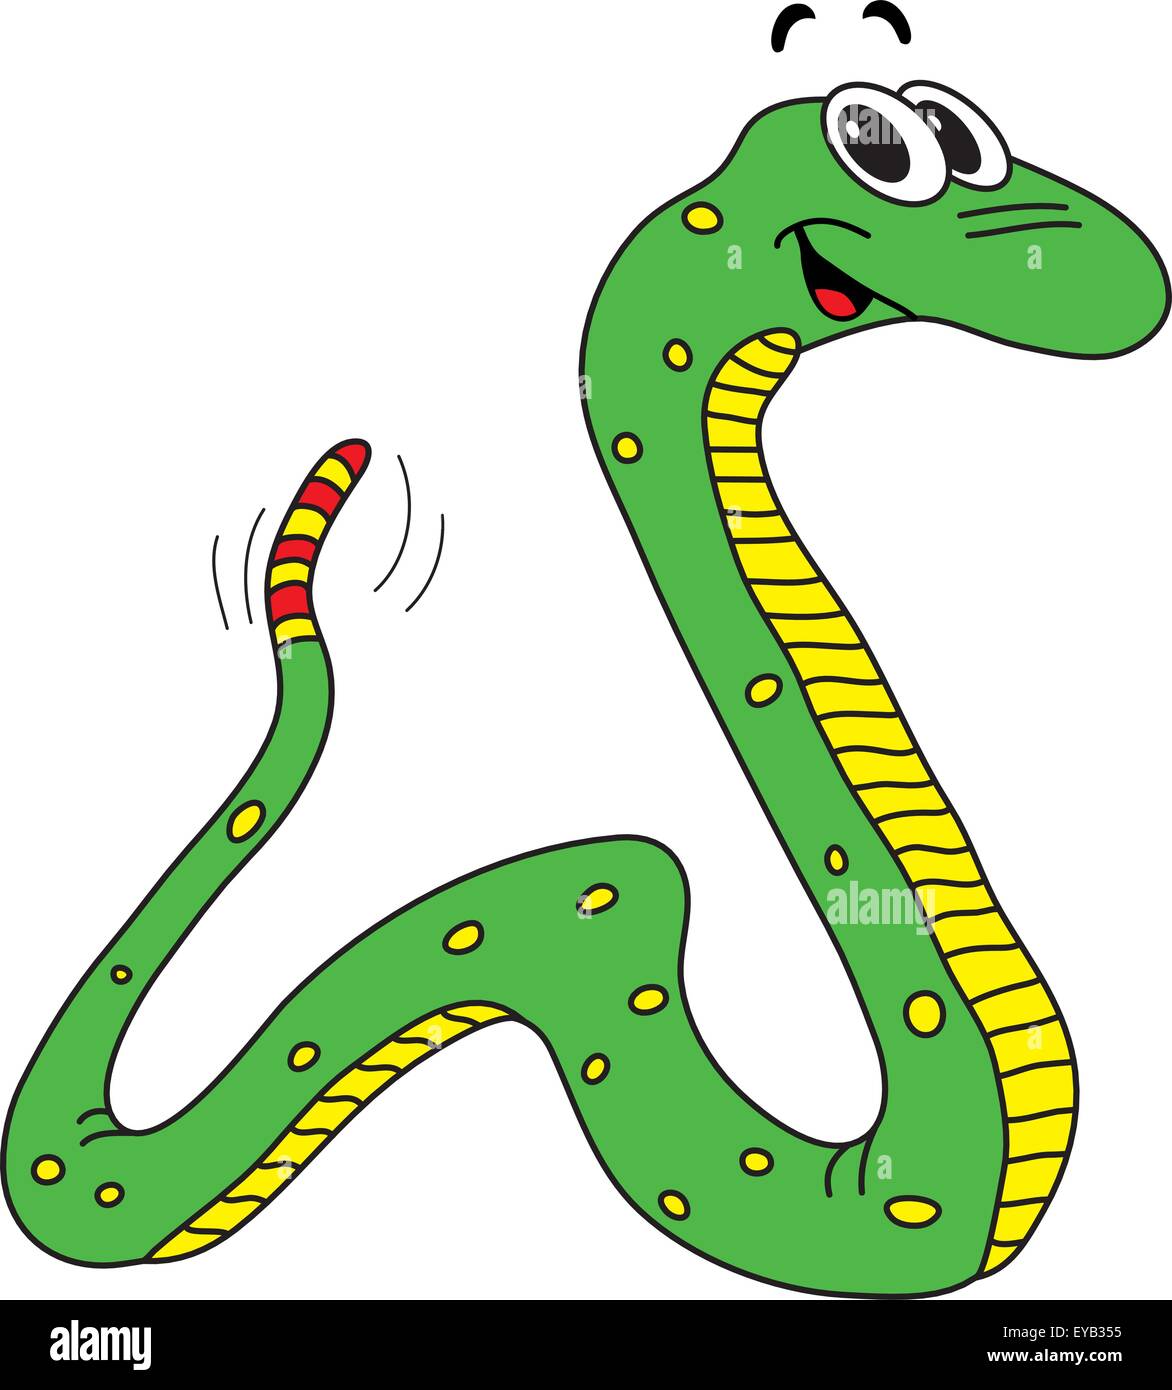 Vektor-Illustration der lustige grüne Schlange Stock Vektor